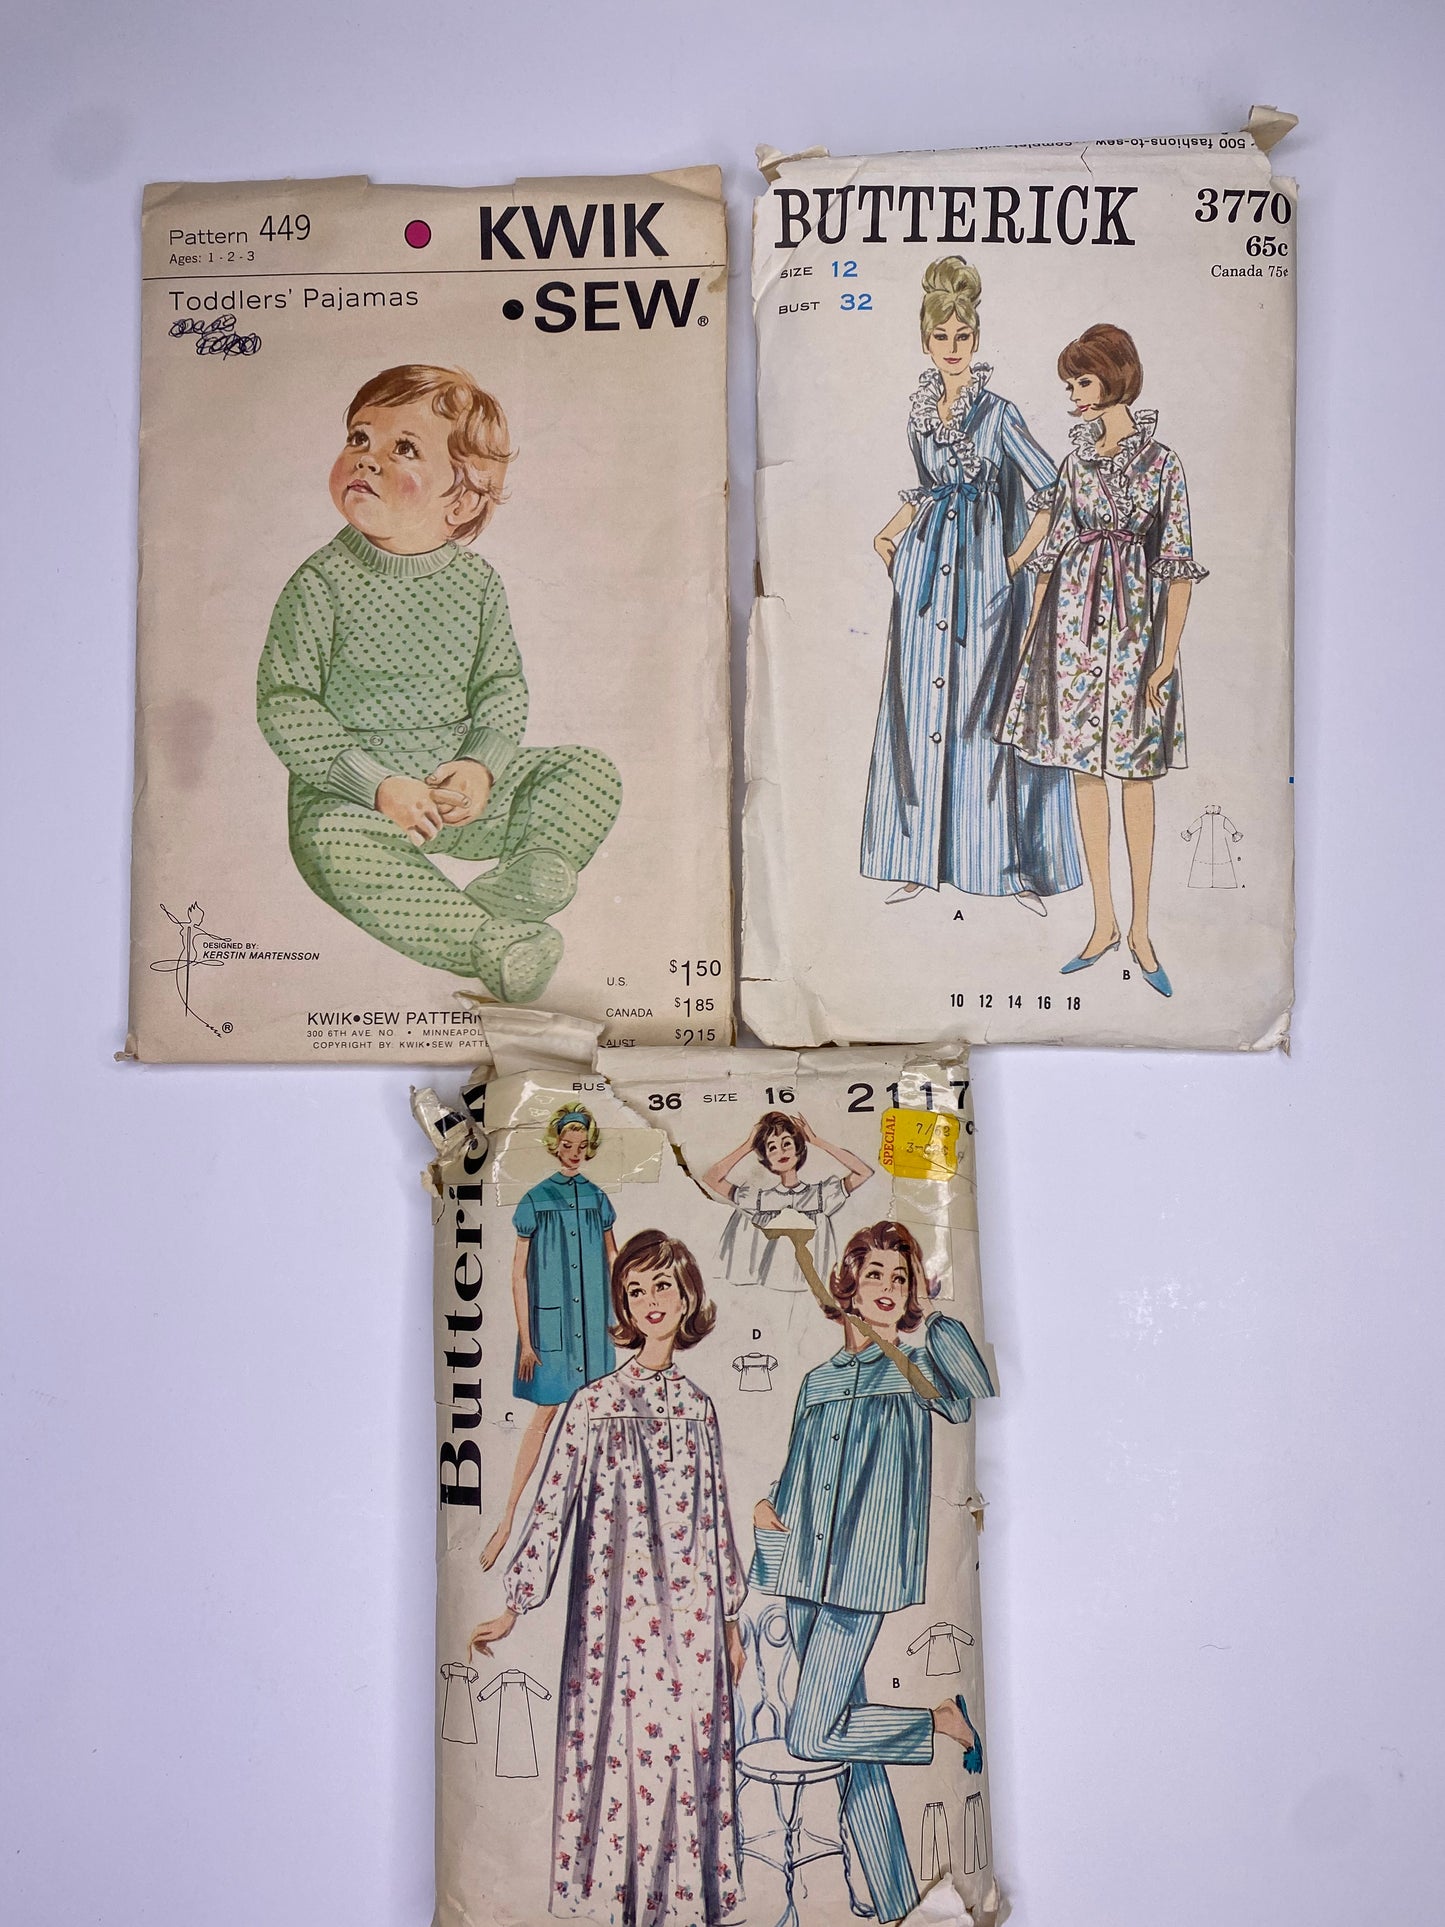 Kwik Sew 449 Baby Footie Pajamas, Vintage Butterick 3770 Women's Housecoat Sewing Pattern, Butterick 2117 Women's Pajama Sewing Pattern PK061